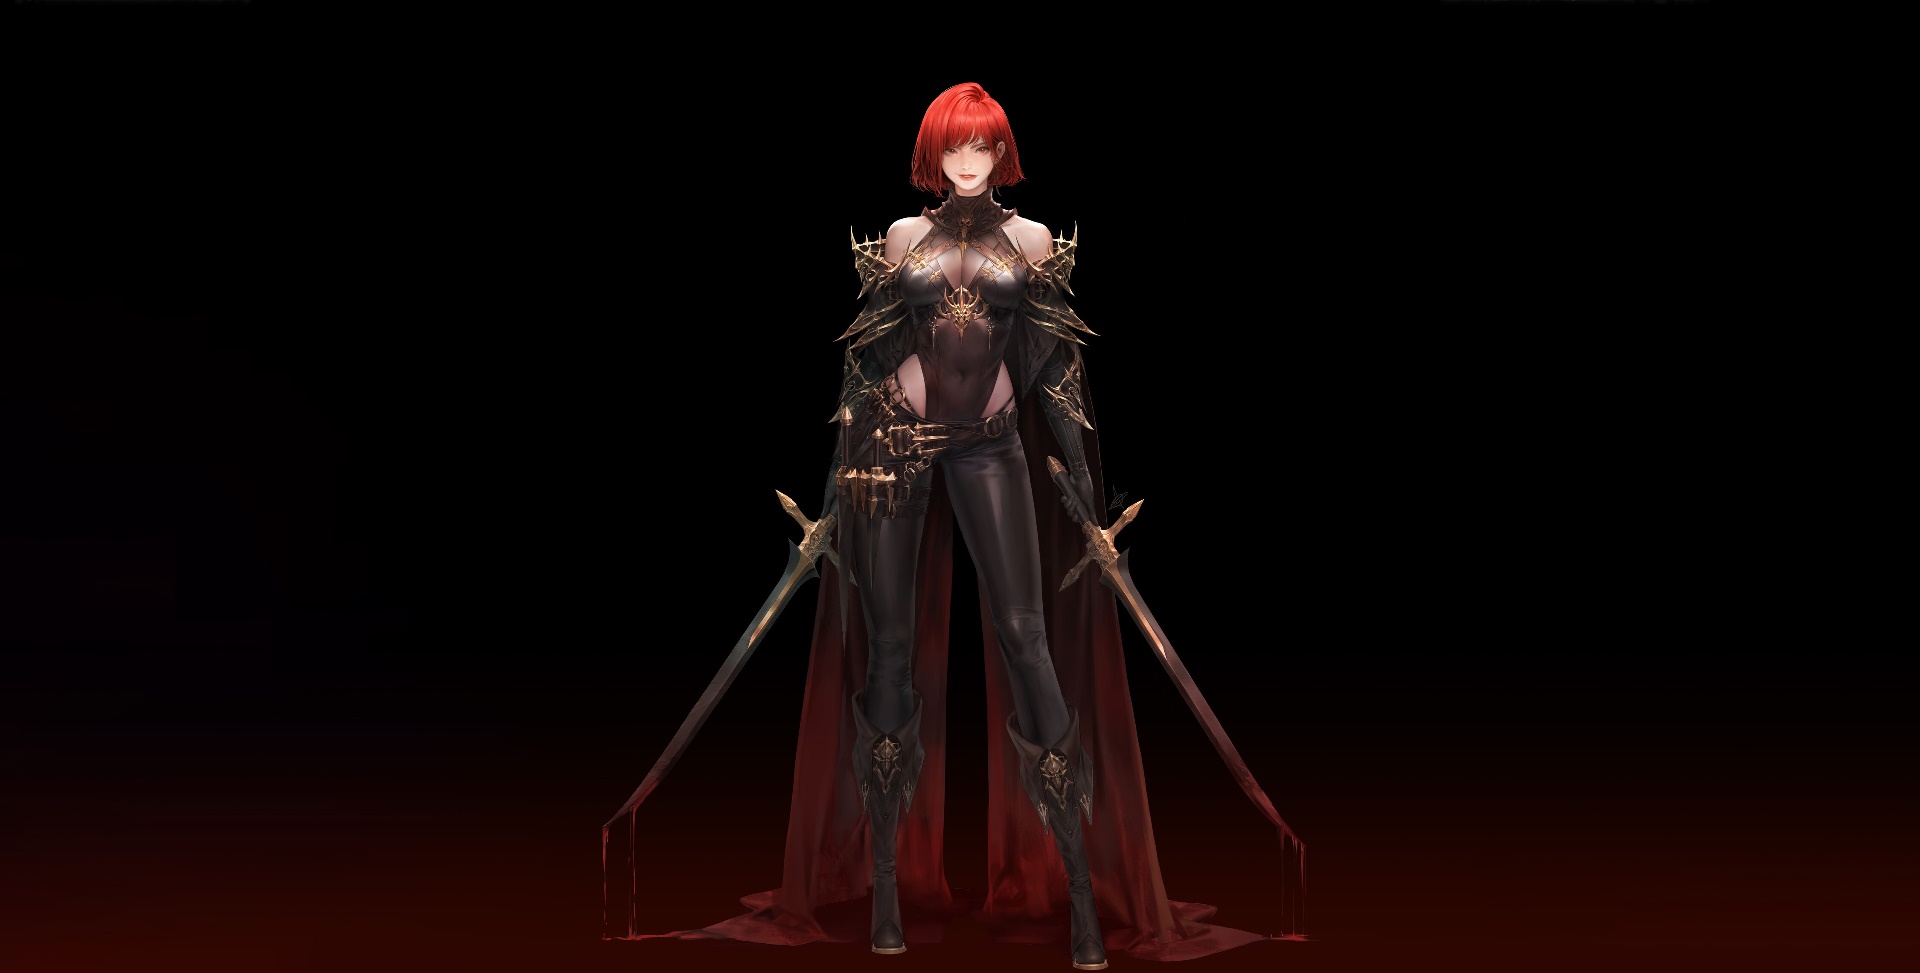 General 1920x973 dark simple background blood fantasy girl fantasy art redhead weapon black background